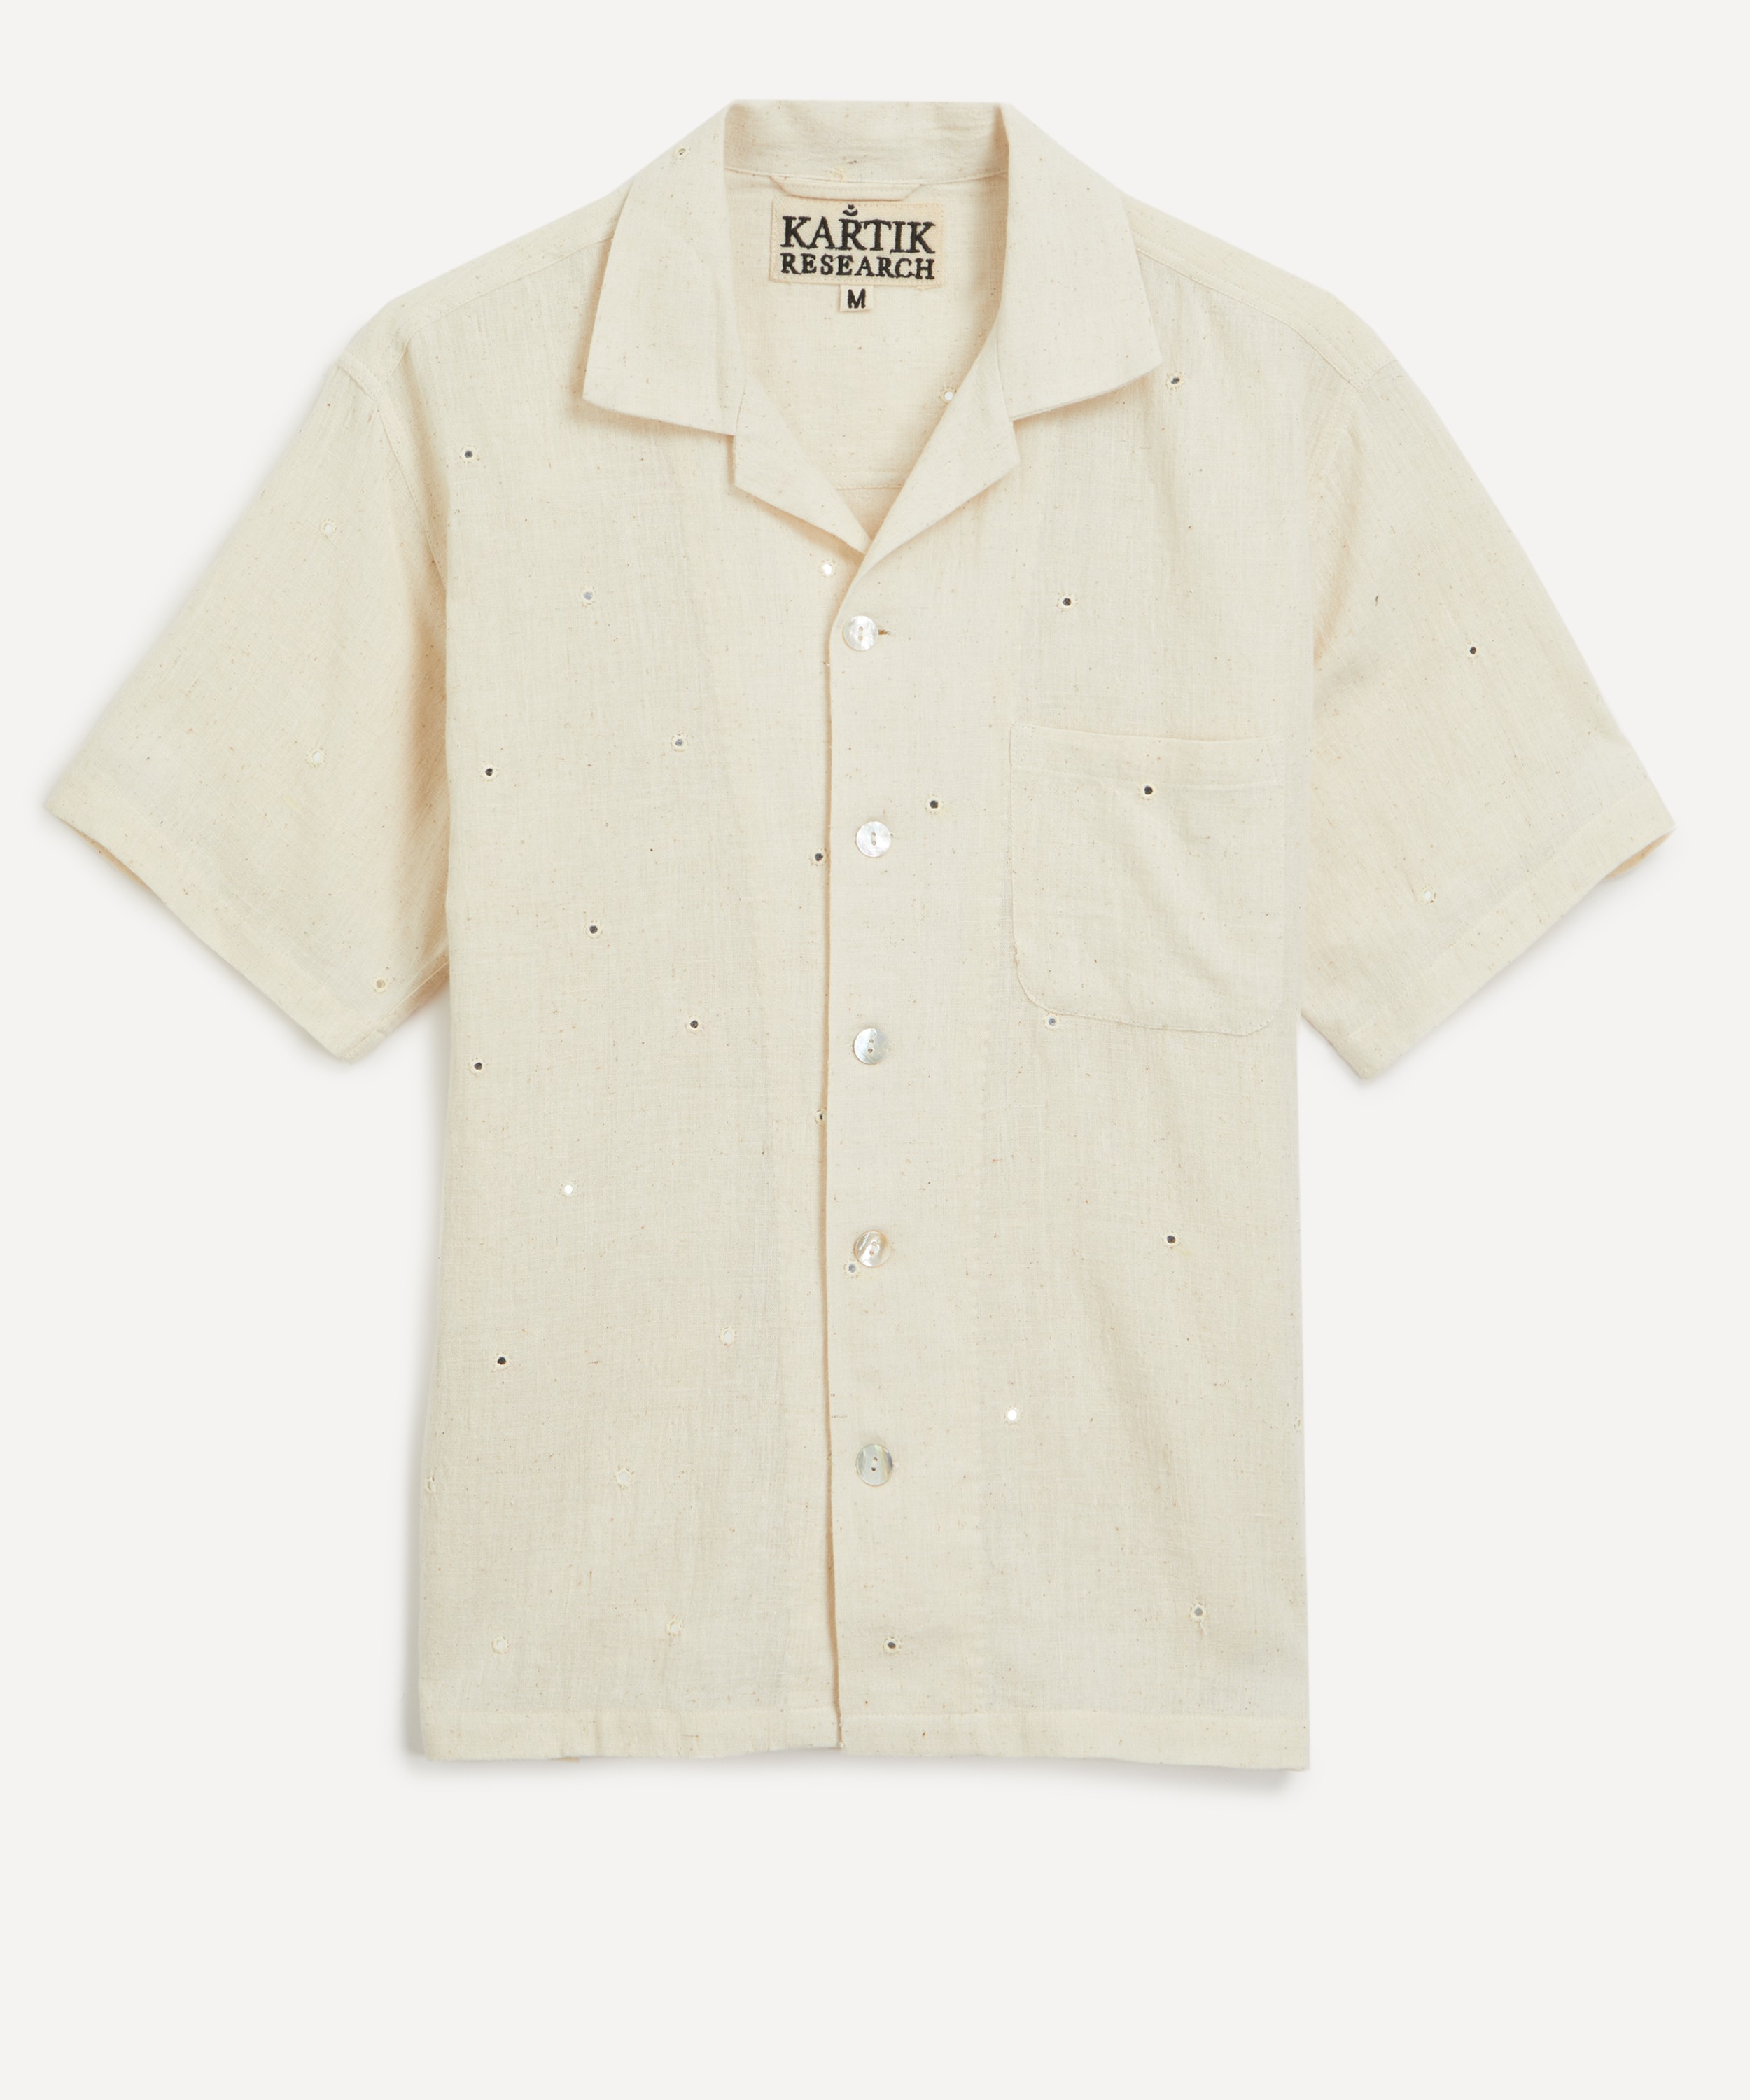 Kartik Research - Mirror-Embroidered Cotton-Gauze Shirt image number 0